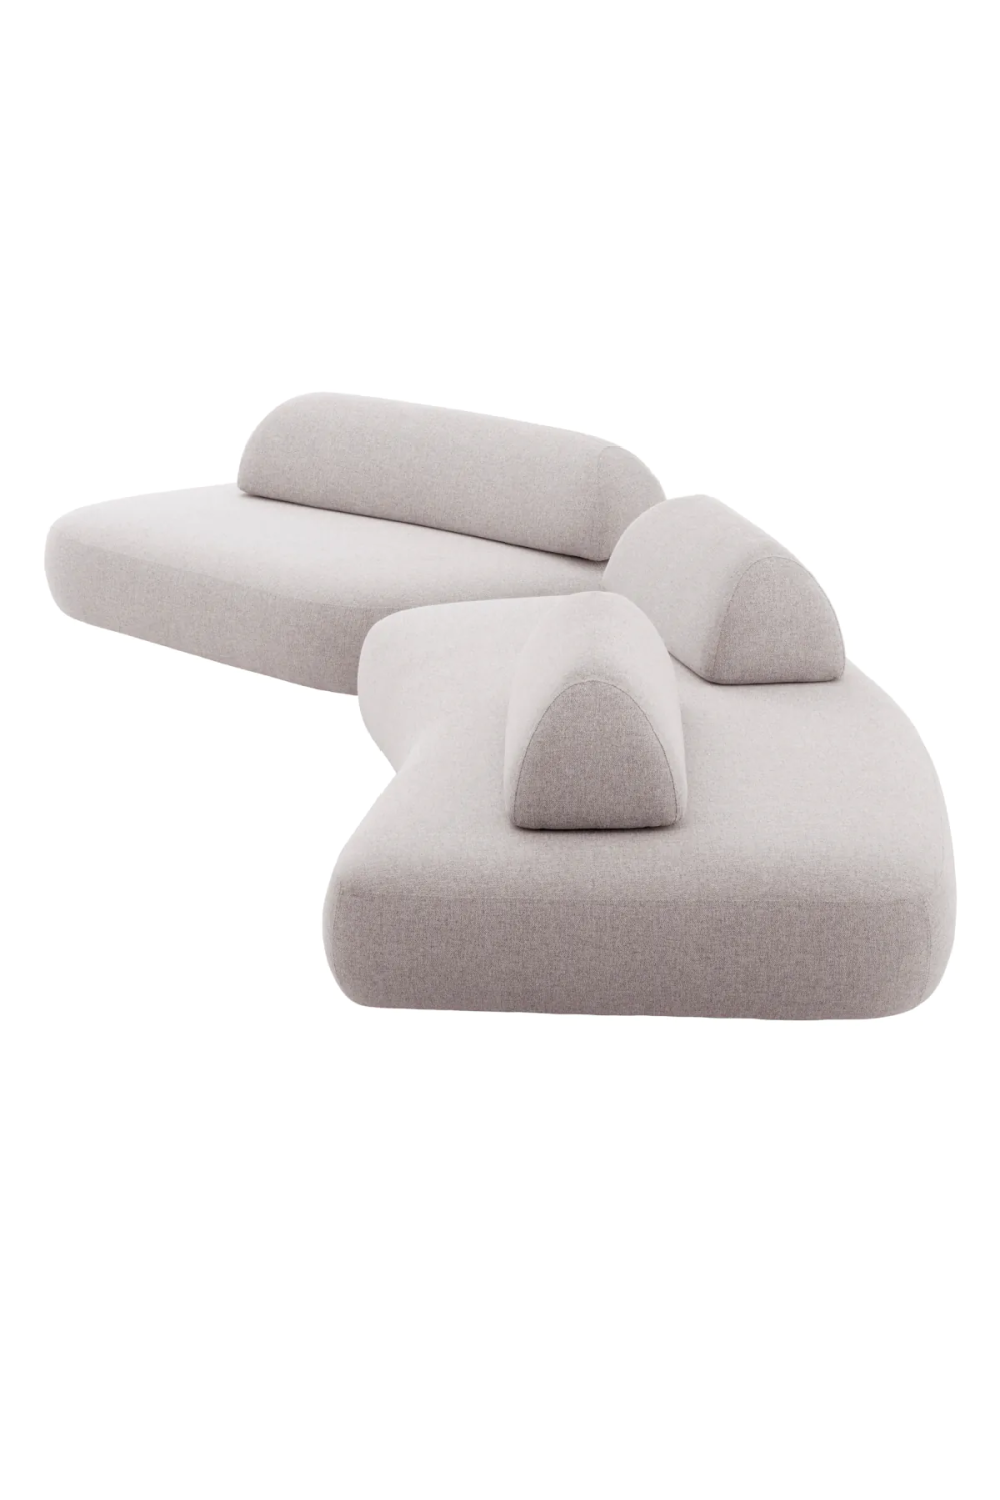 Curved Modern Outdoor Sofa | Eichholtz Residenza | Oroa.com